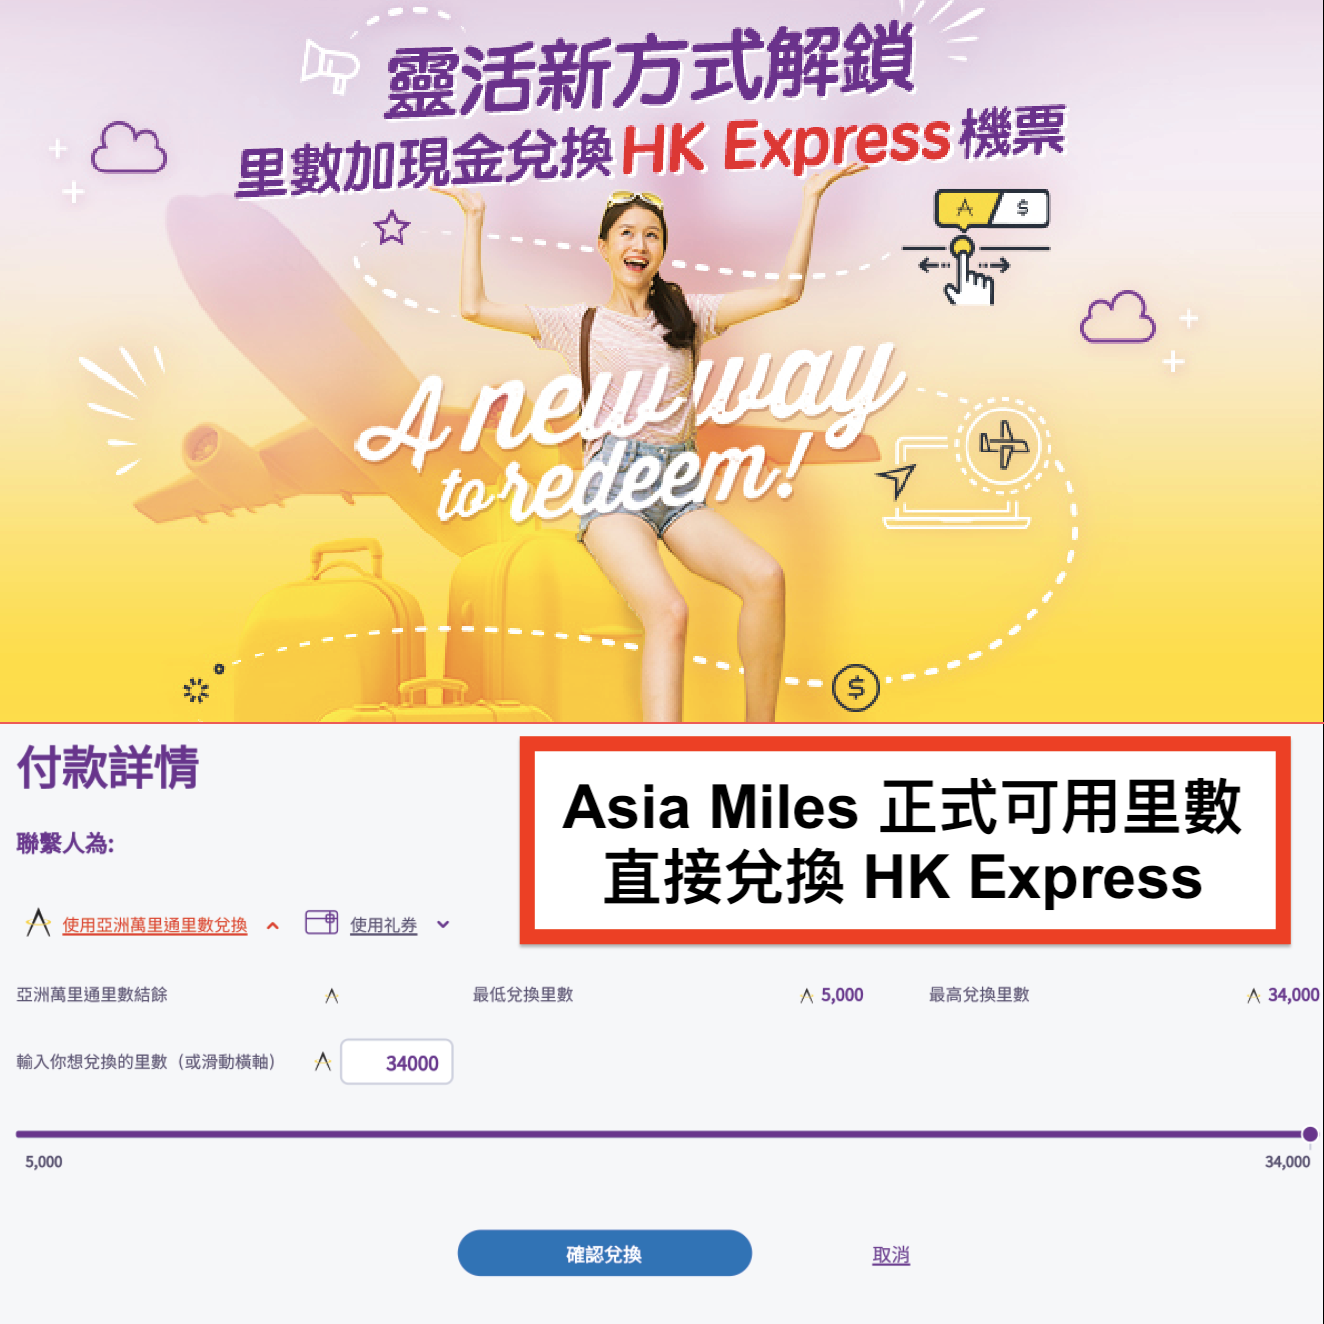 Asia Miles換到HK Express機票啦！額外託運行李、機上餐飲、座位選項、U-First 優先服務等都可以！